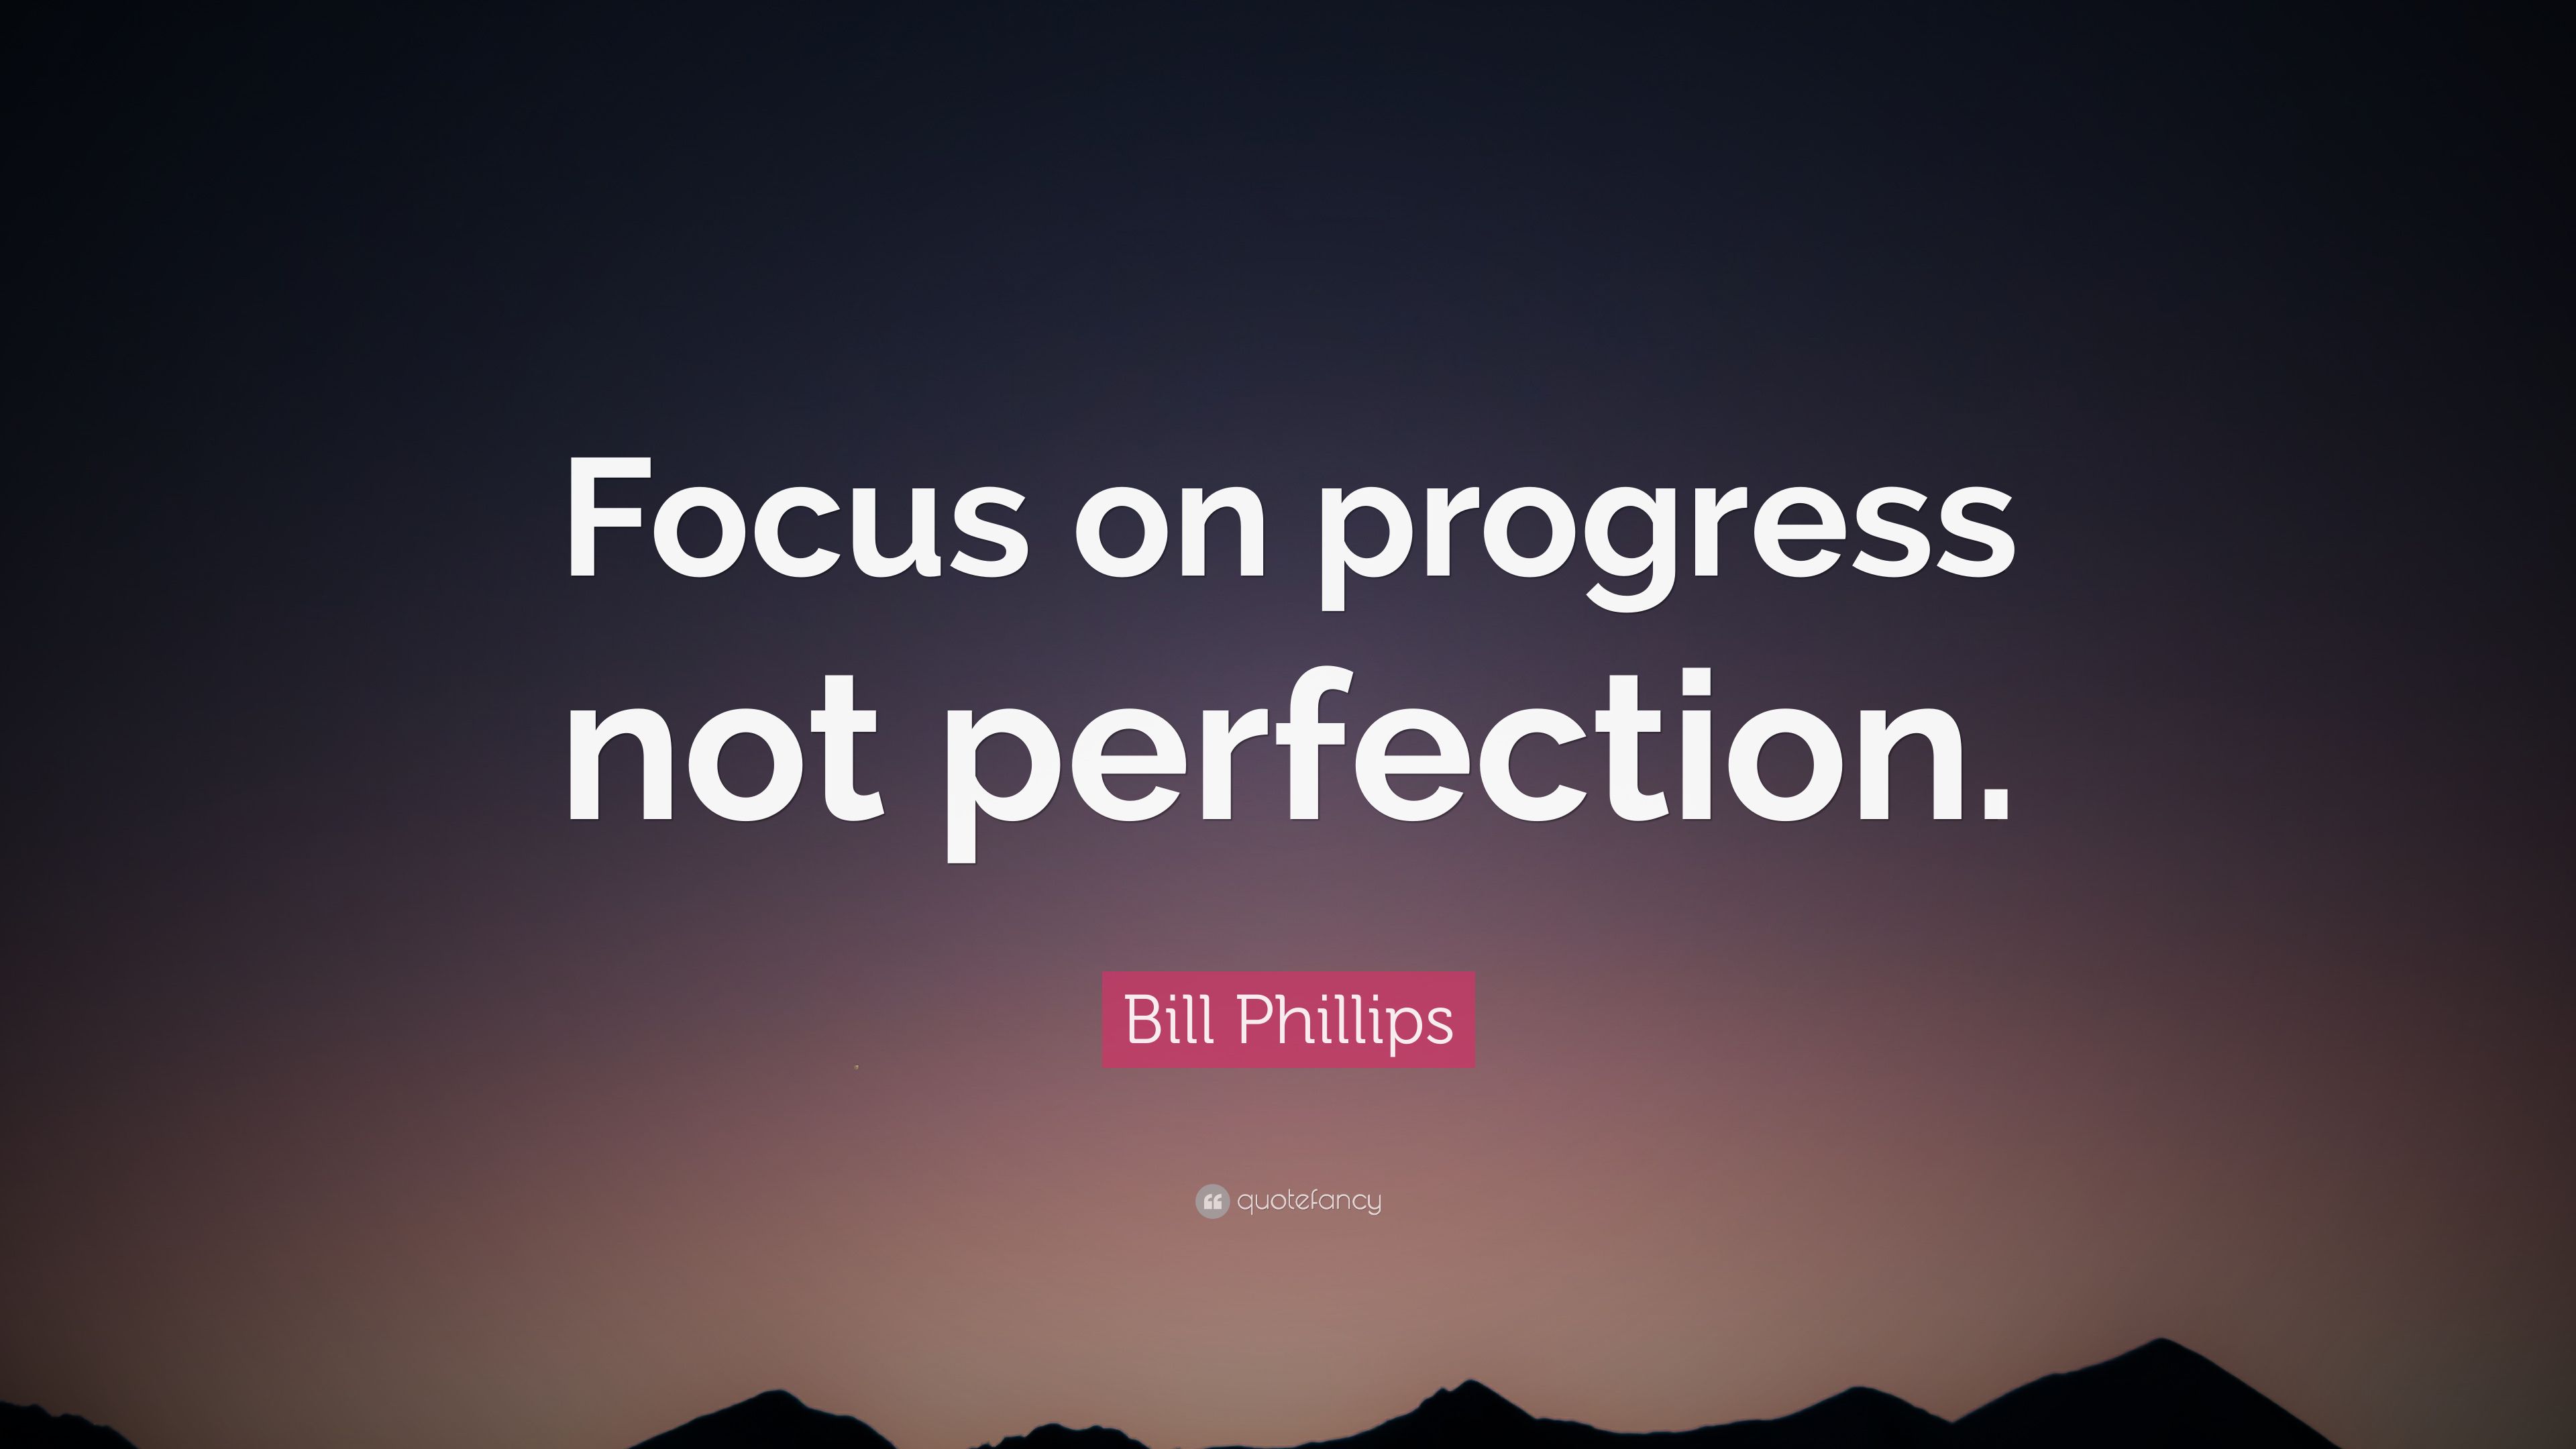 Bill Phillips Quote: “Focus on progress not perfection.” (9 wallpaper)